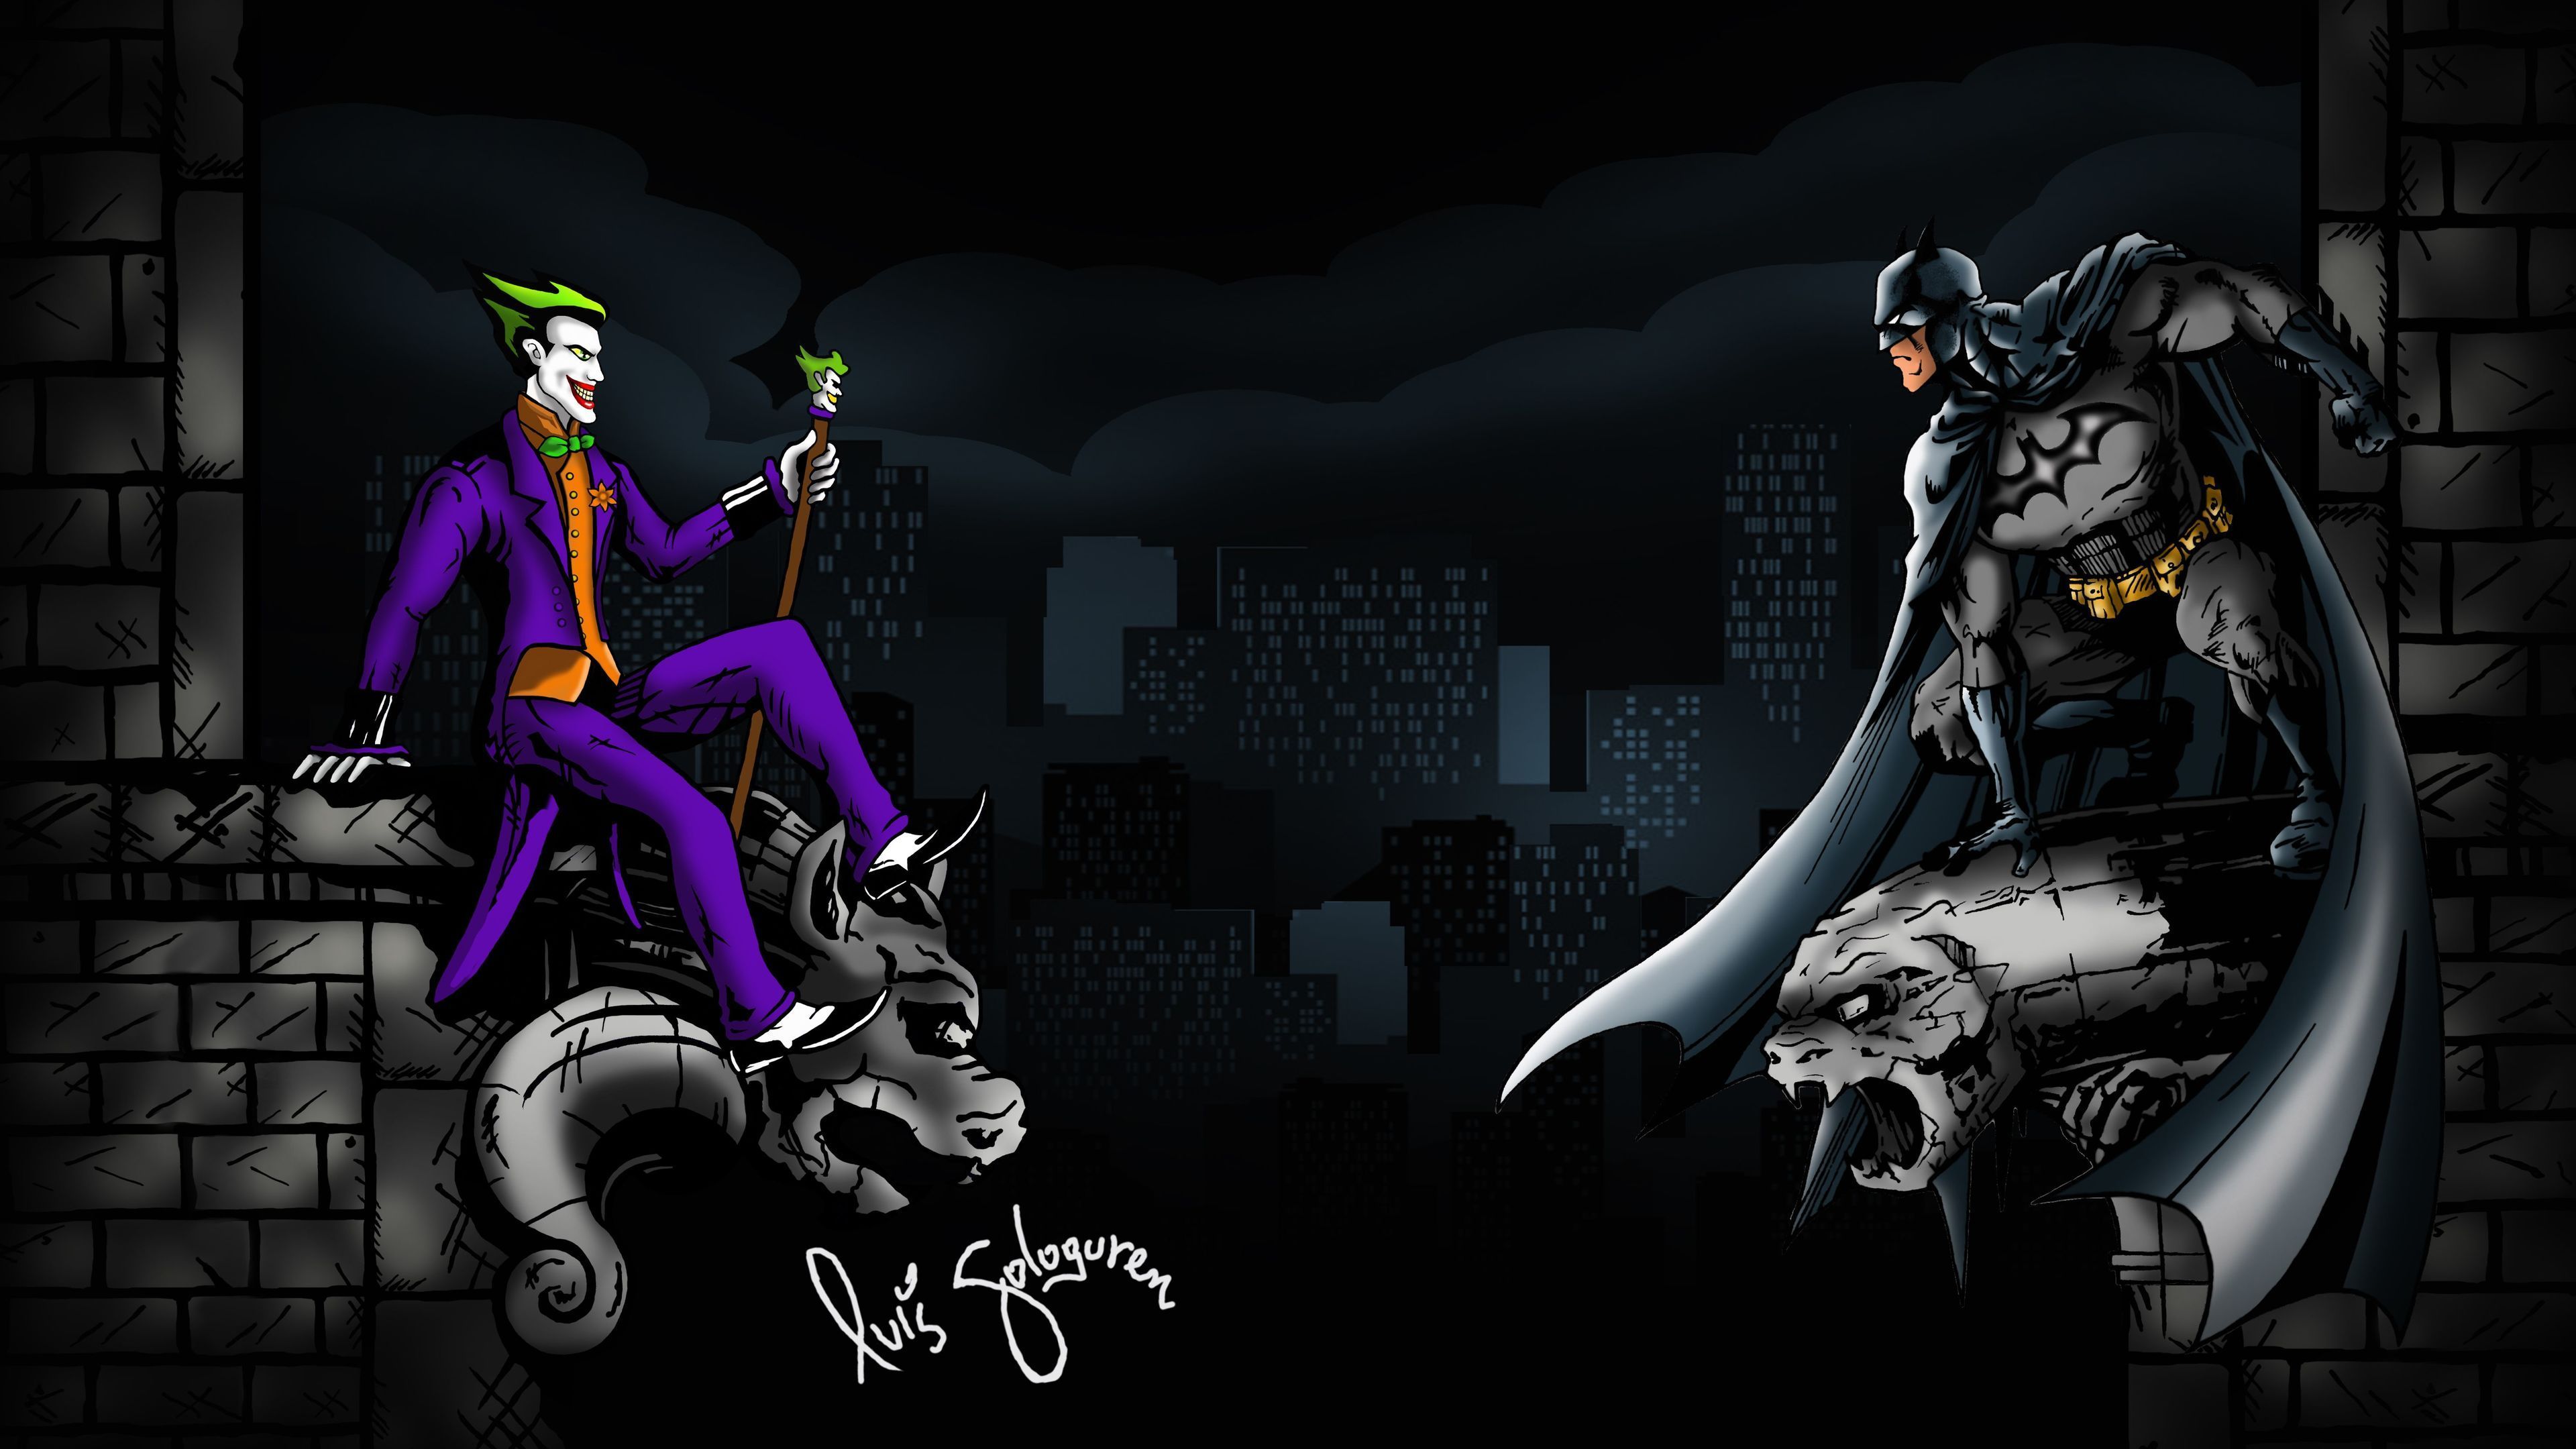 Joker Vs Batman 5k Supervillain Wallpaper, Superheroes Wallpaper, Joker Wallpaper, Hd Wallpaper, Digital. Joker Wallpaper, Batman Wallpaper, Batman Vs Joker